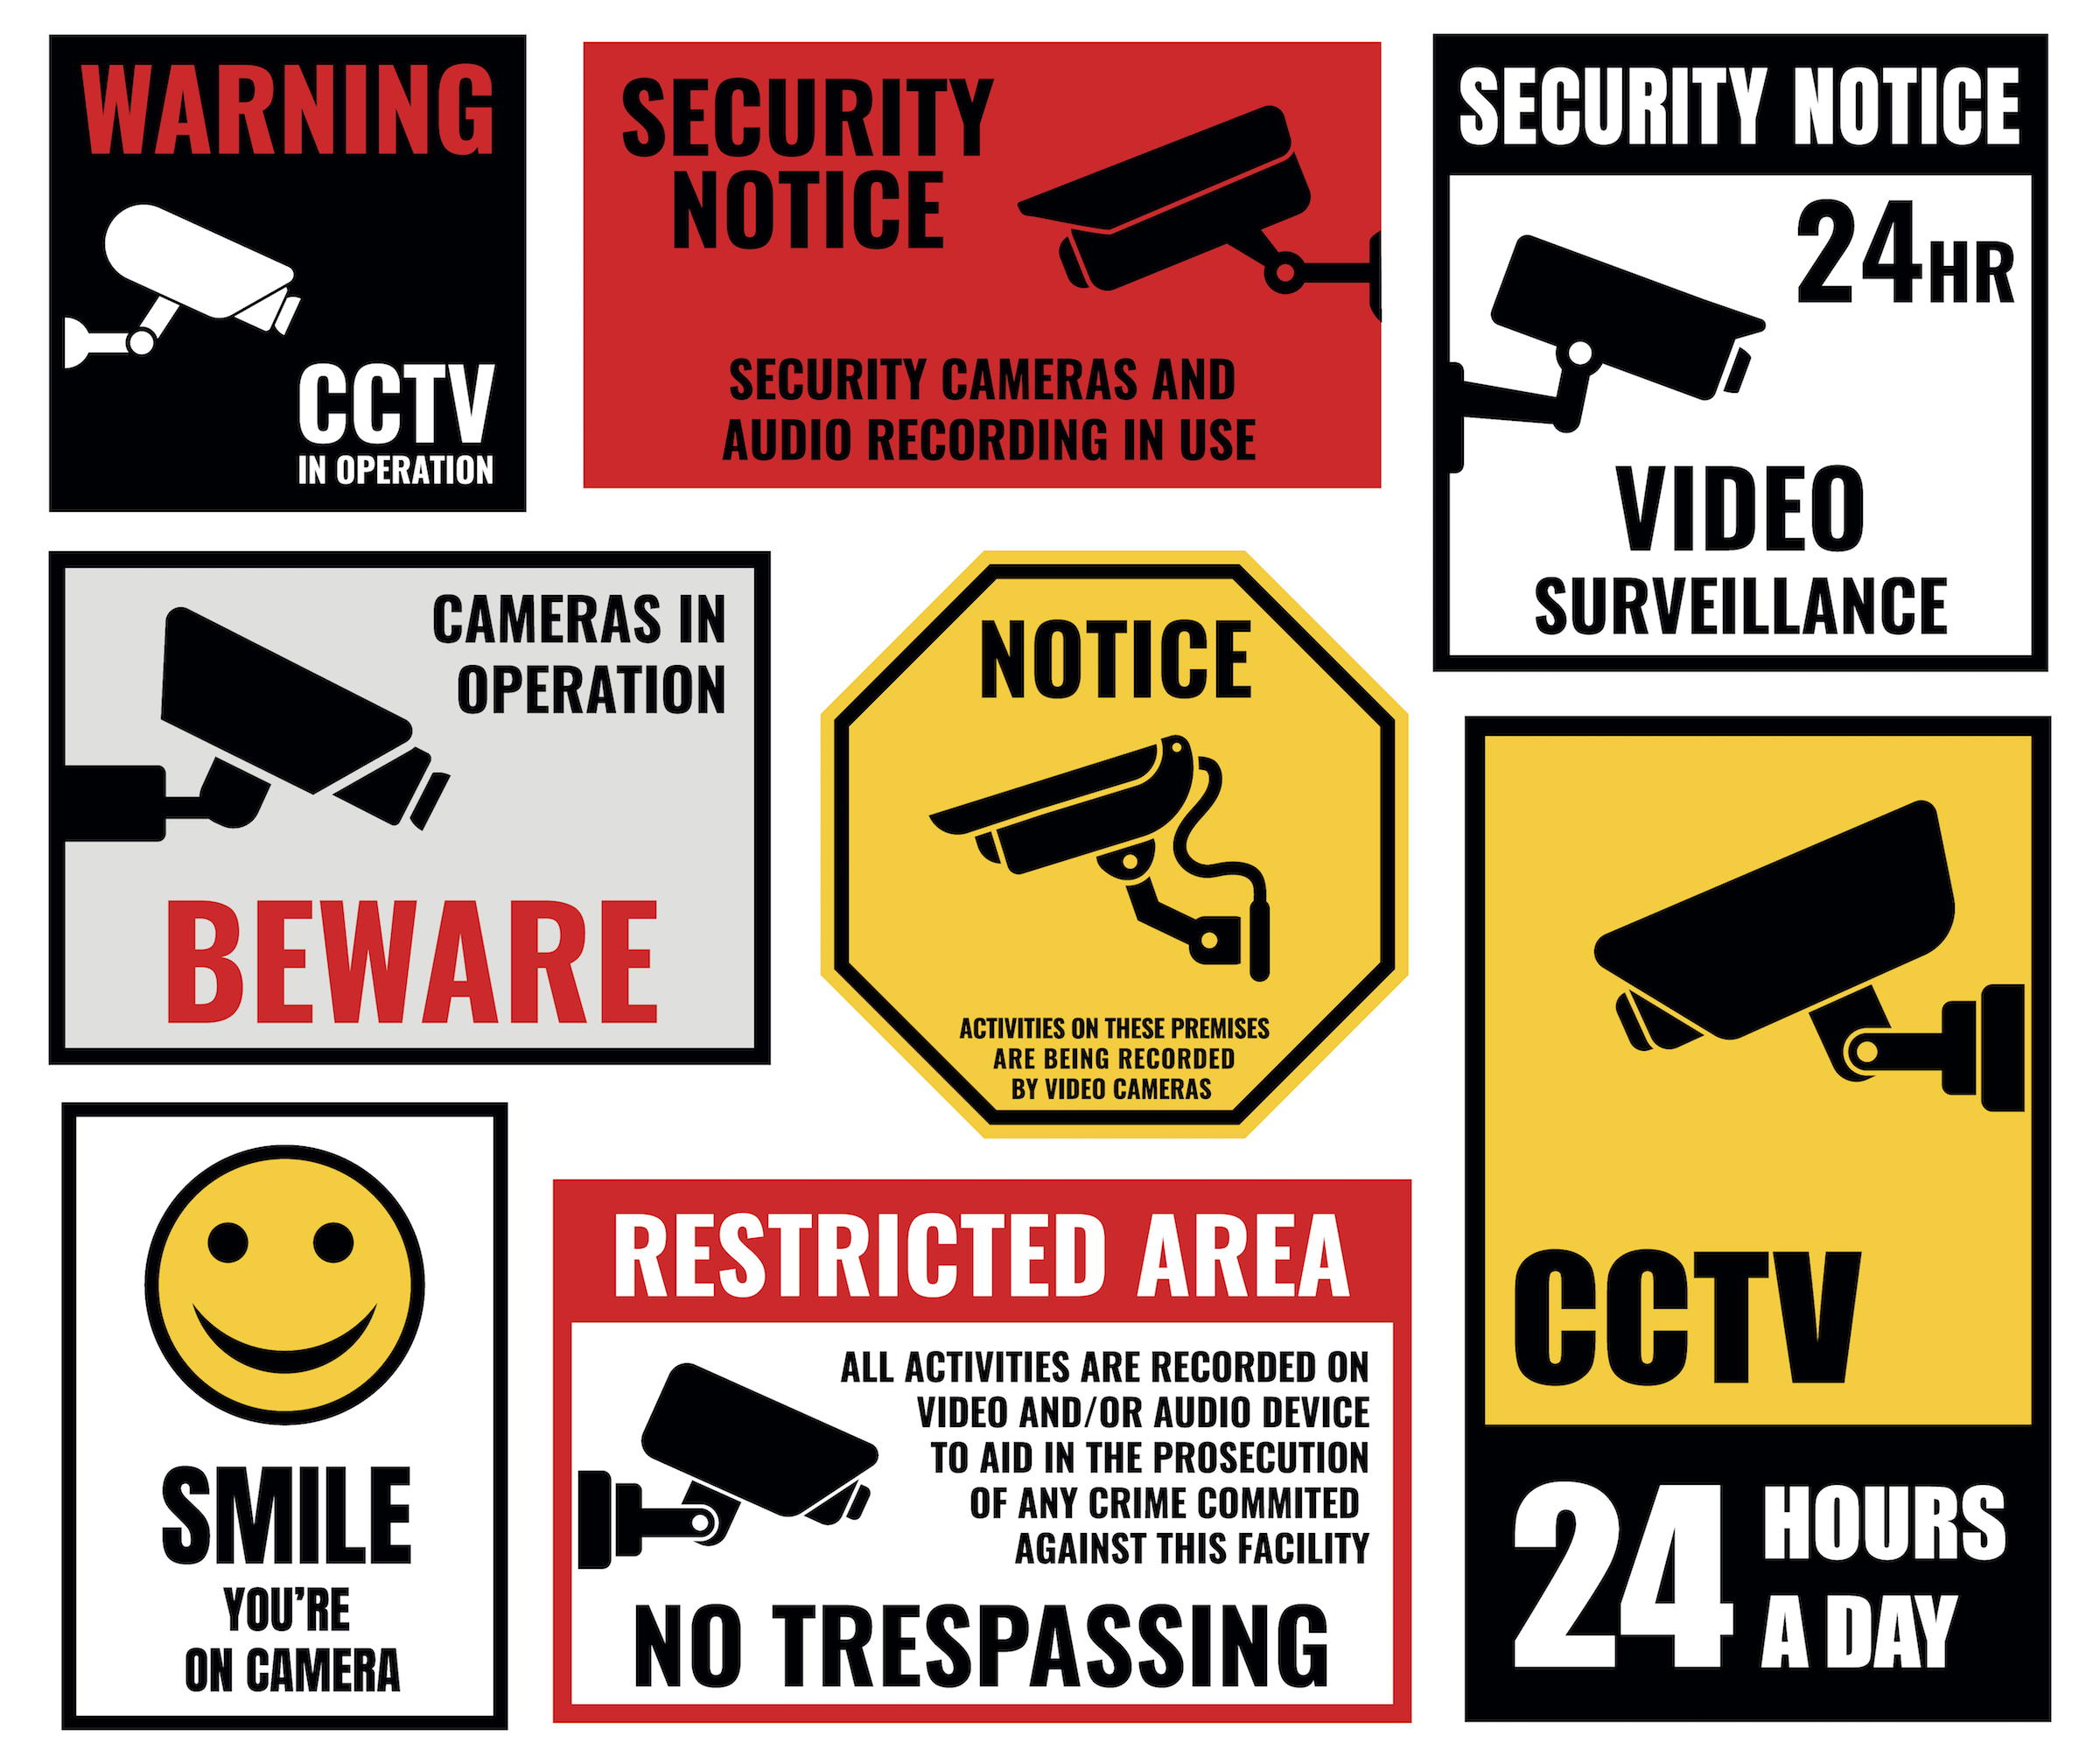 Professional Video Surveillance Installation Locksmith Tampa Security Lock Systems 813-874-1608